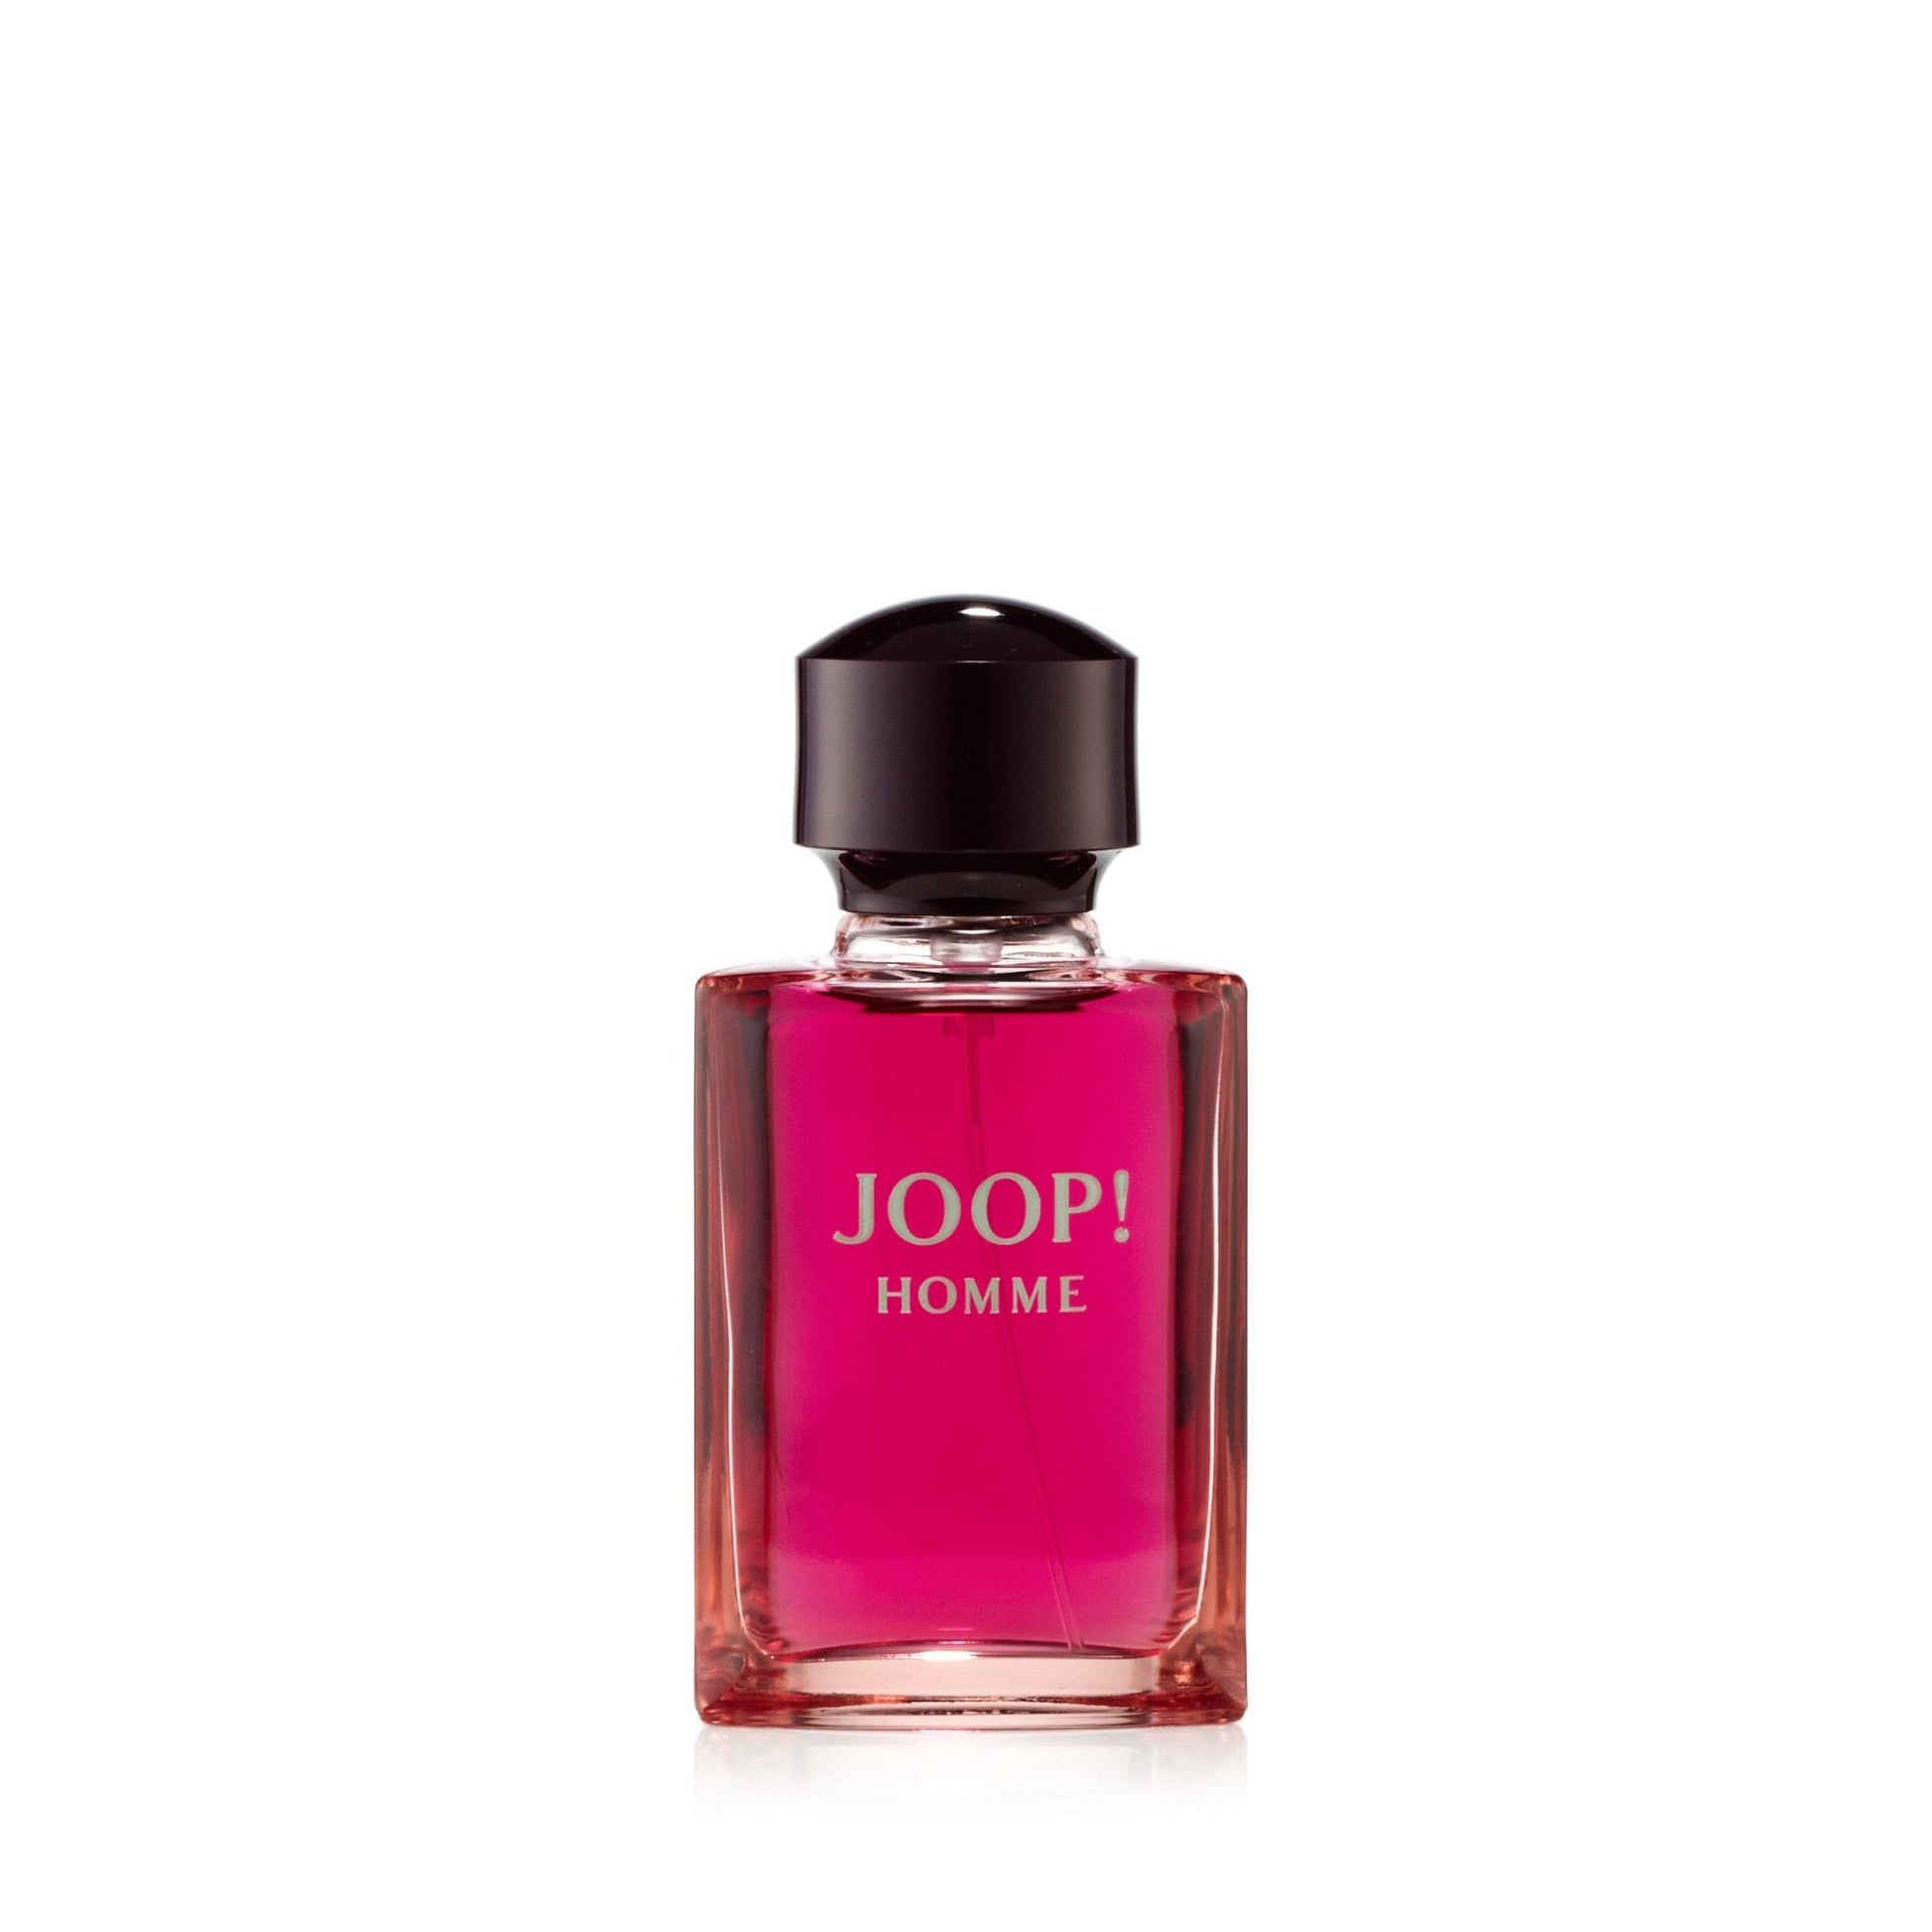 Joop! Homme Eau de Toilette Spray for Men by Joop!, Product image 3